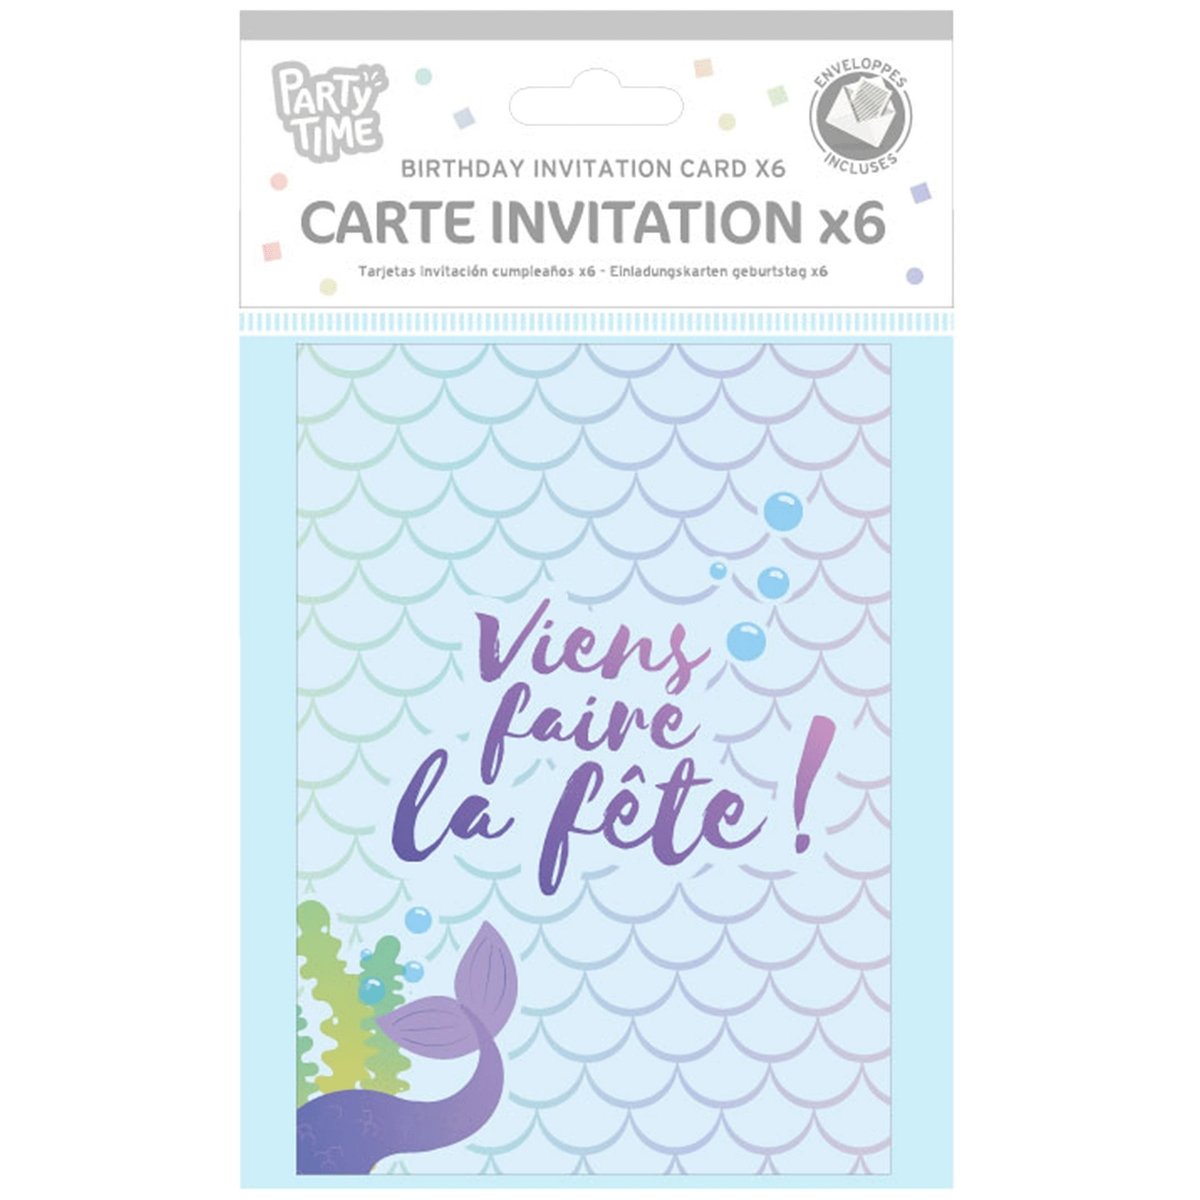 8 Cartes Invitation Anniversaire Sirène Cartesdart